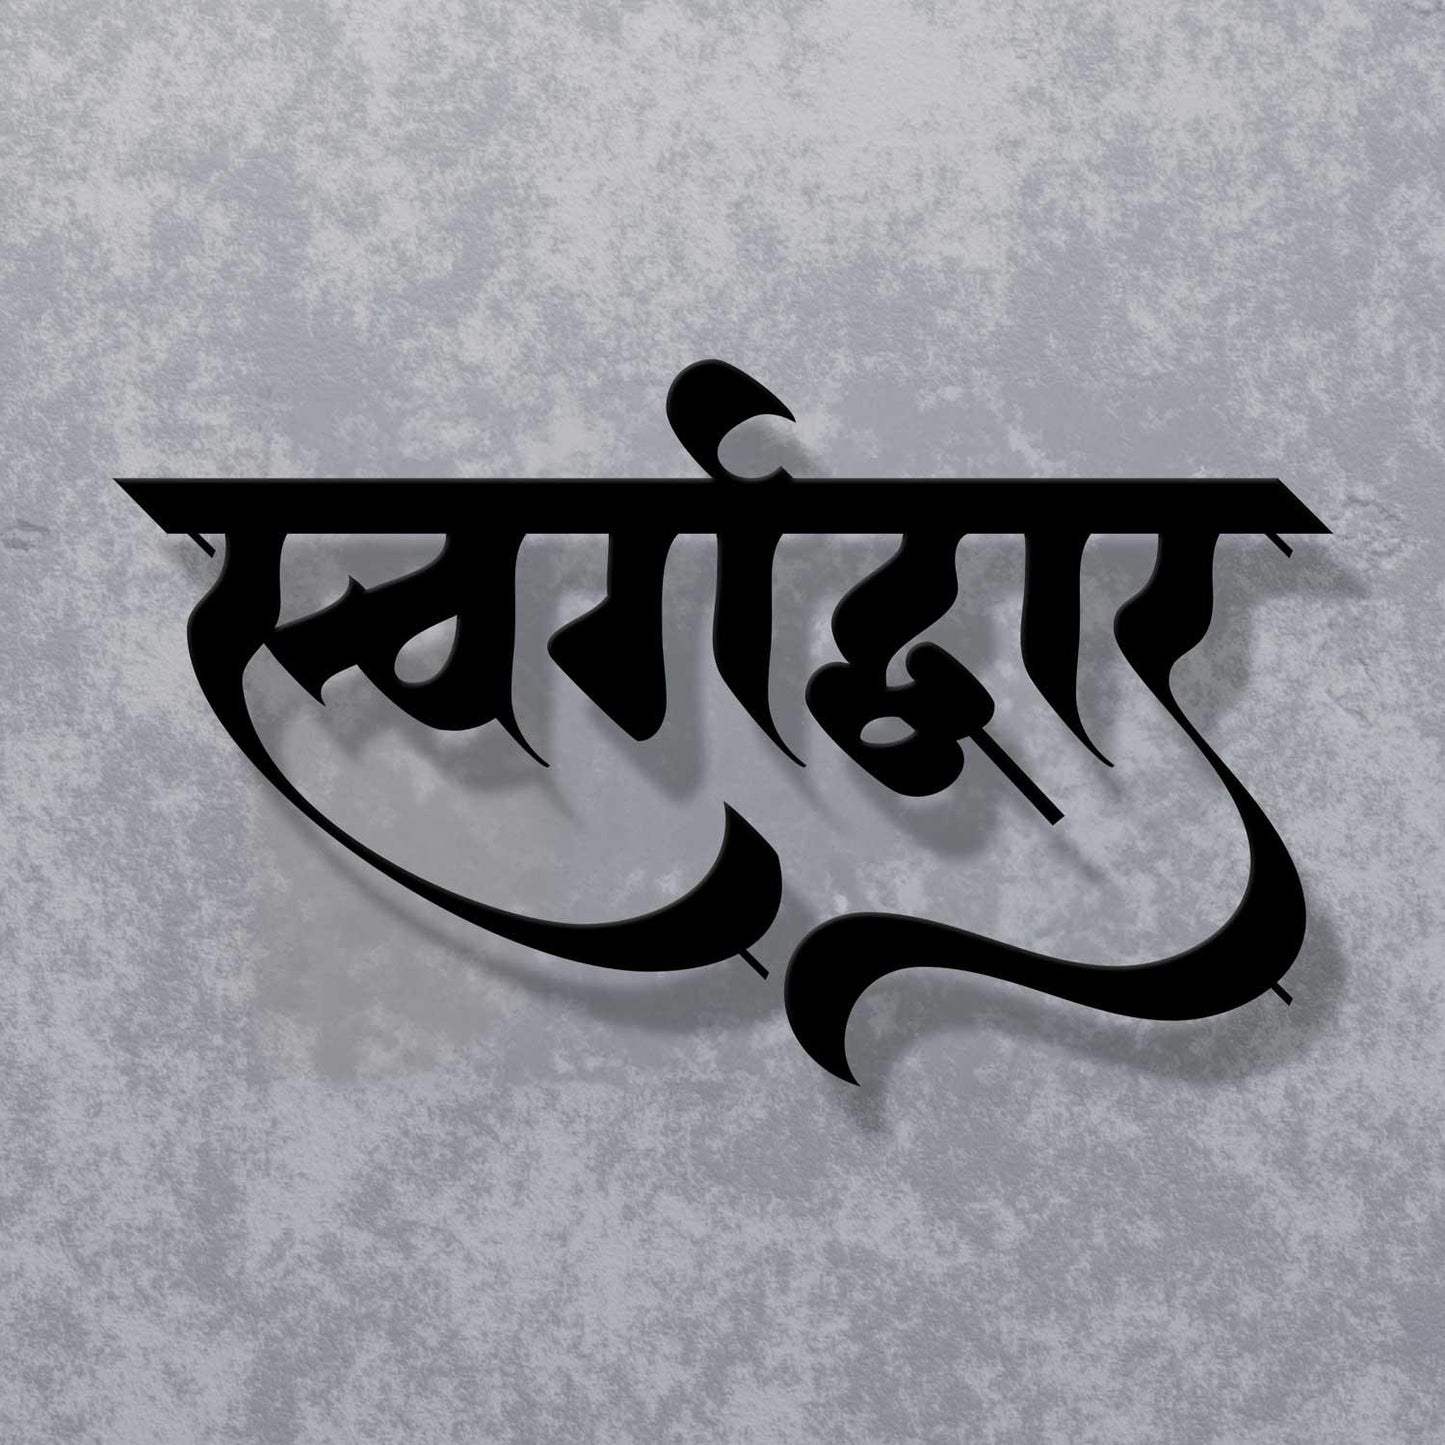 Swargadwar - Hindi Calligraphy Cutout Steel Name Plate - Housenama